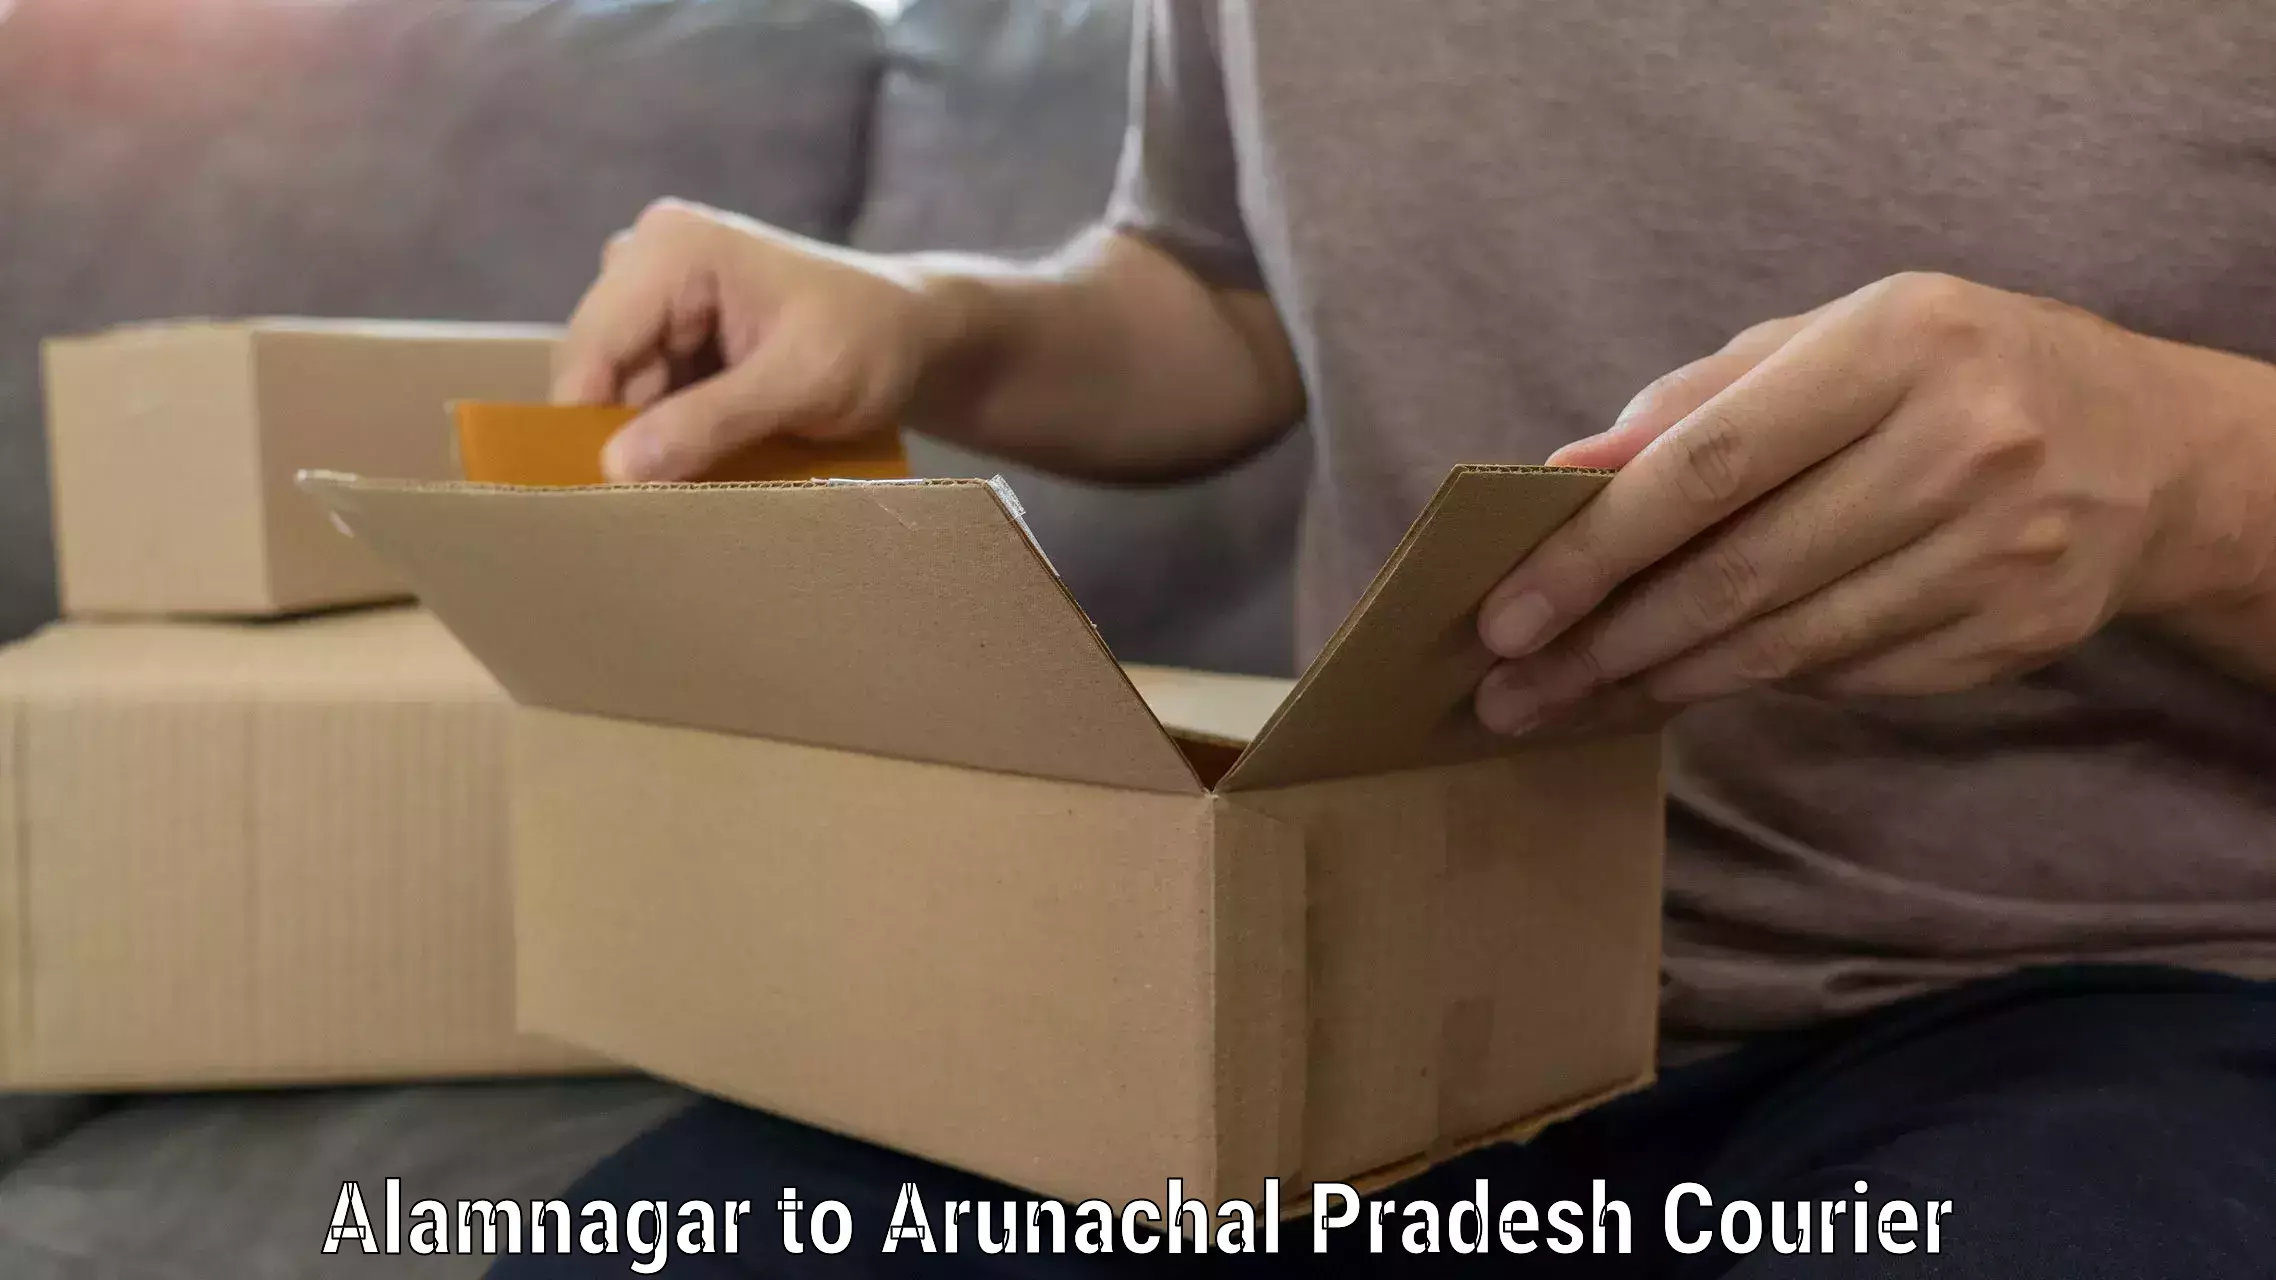 Efficient moving company Alamnagar to Arunachal Pradesh